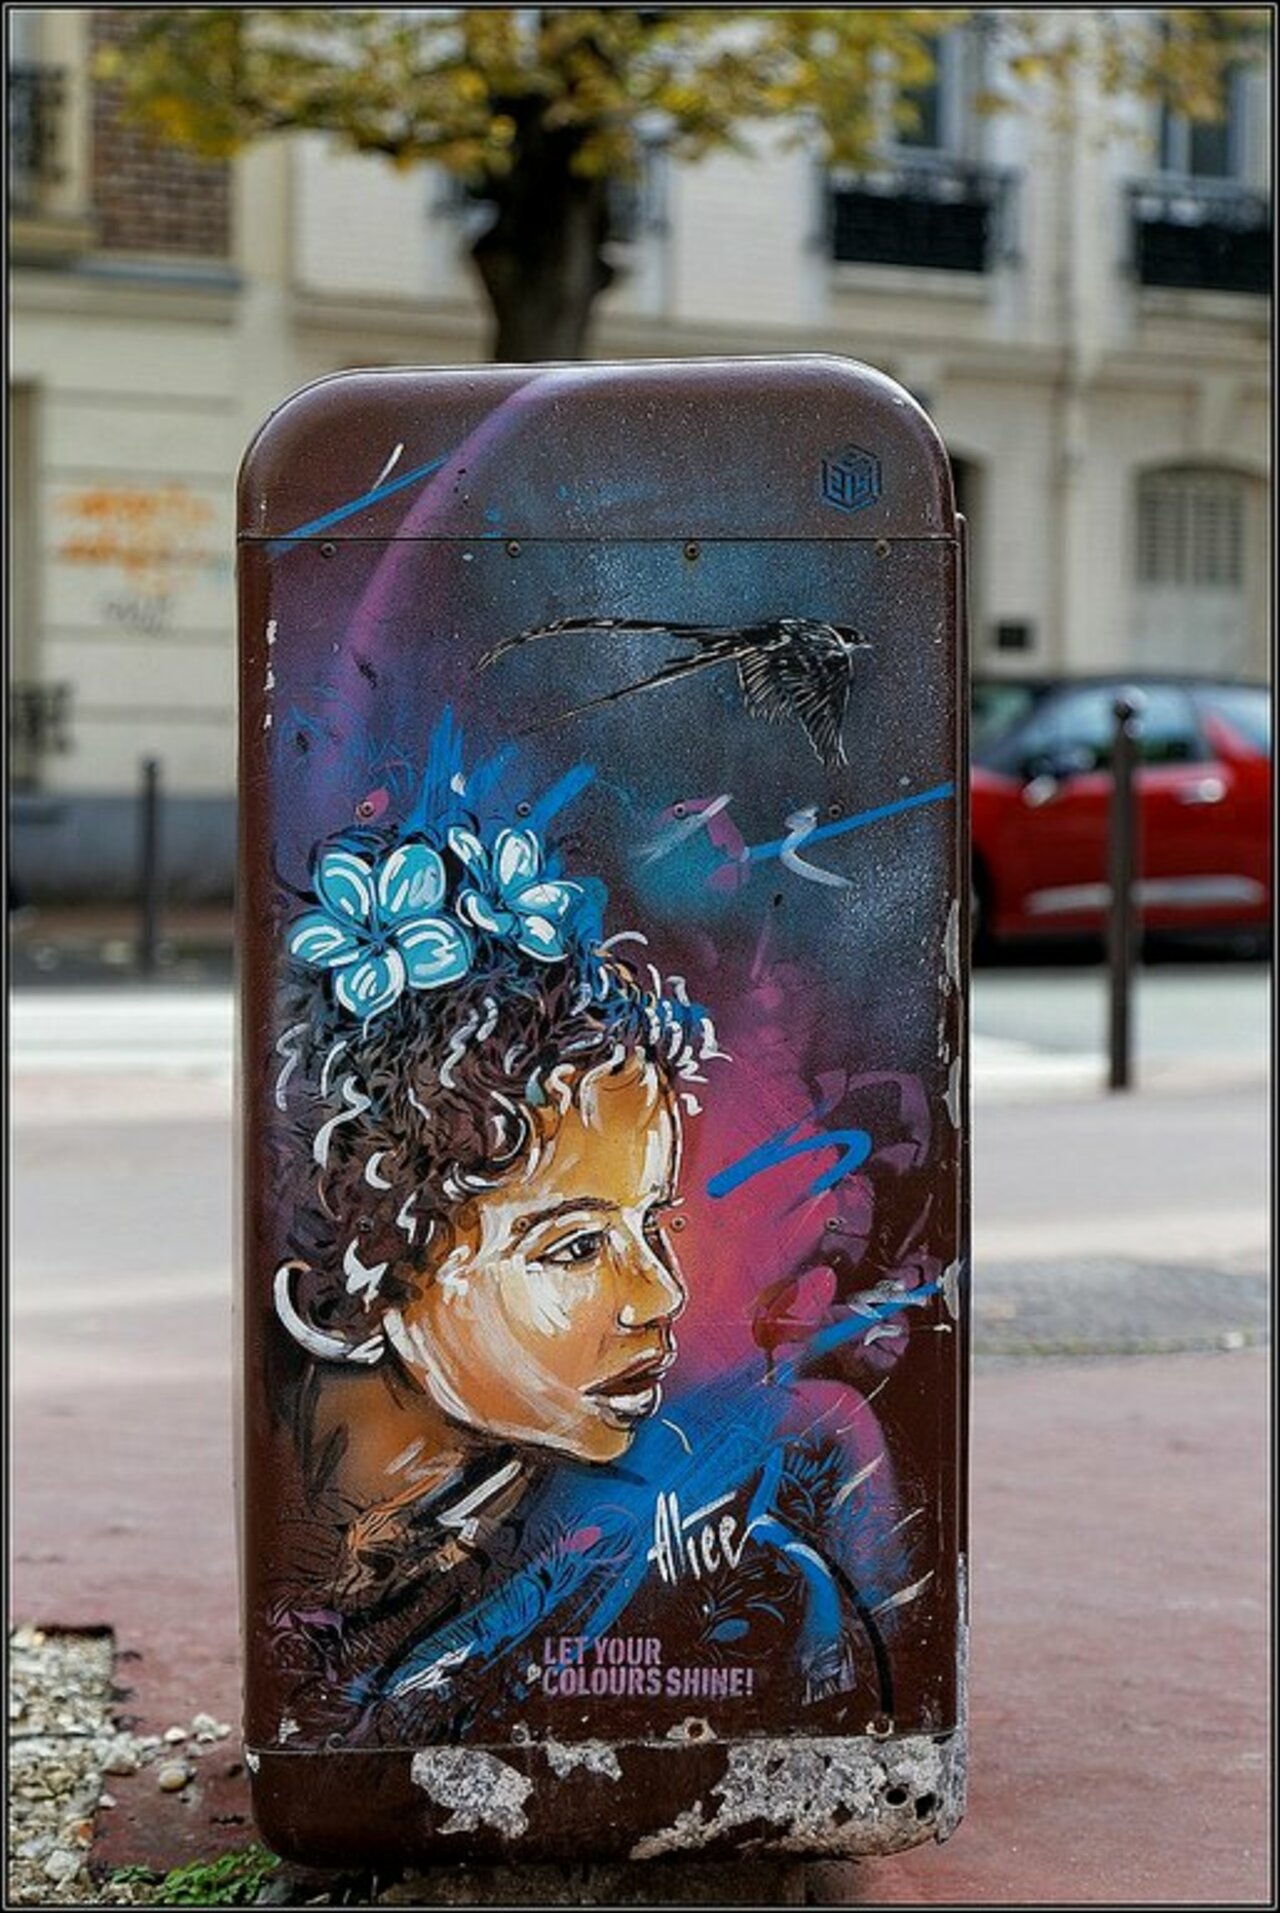 Street Art by Alice Pasquini in #Vitry-sur-Seine http://www.urbacolors.com #art #mural #graffiti #streetart https://t.co/Qx2tGjiZzH